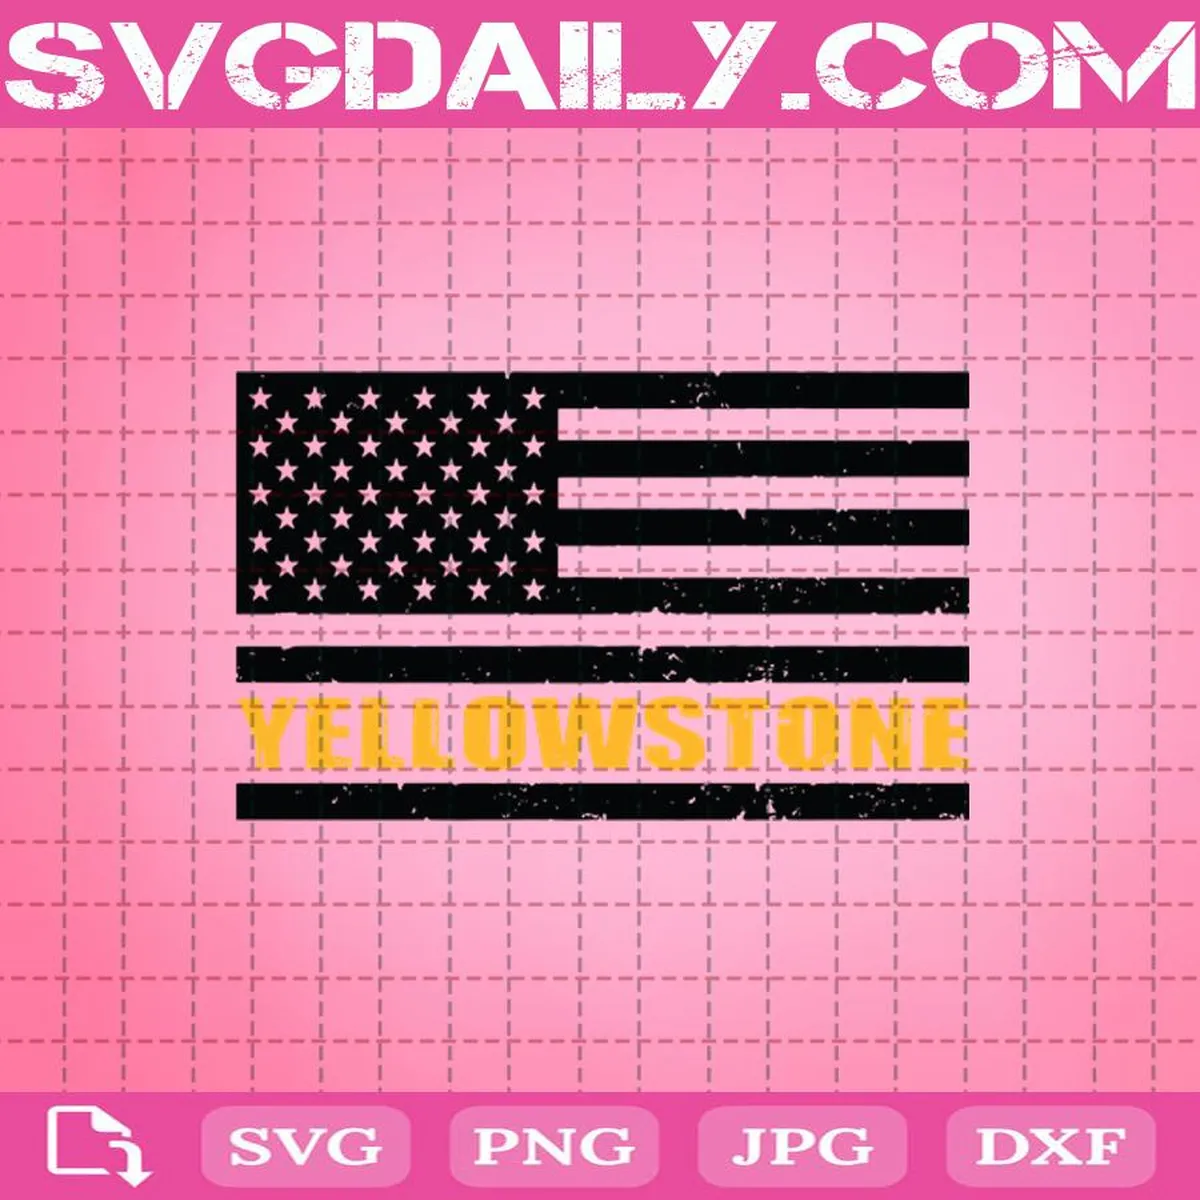 Yellowstone Flag Svg, Vintage Yellowstone National Park Flag Svg, American Flag Svg, Yellowstone Svg